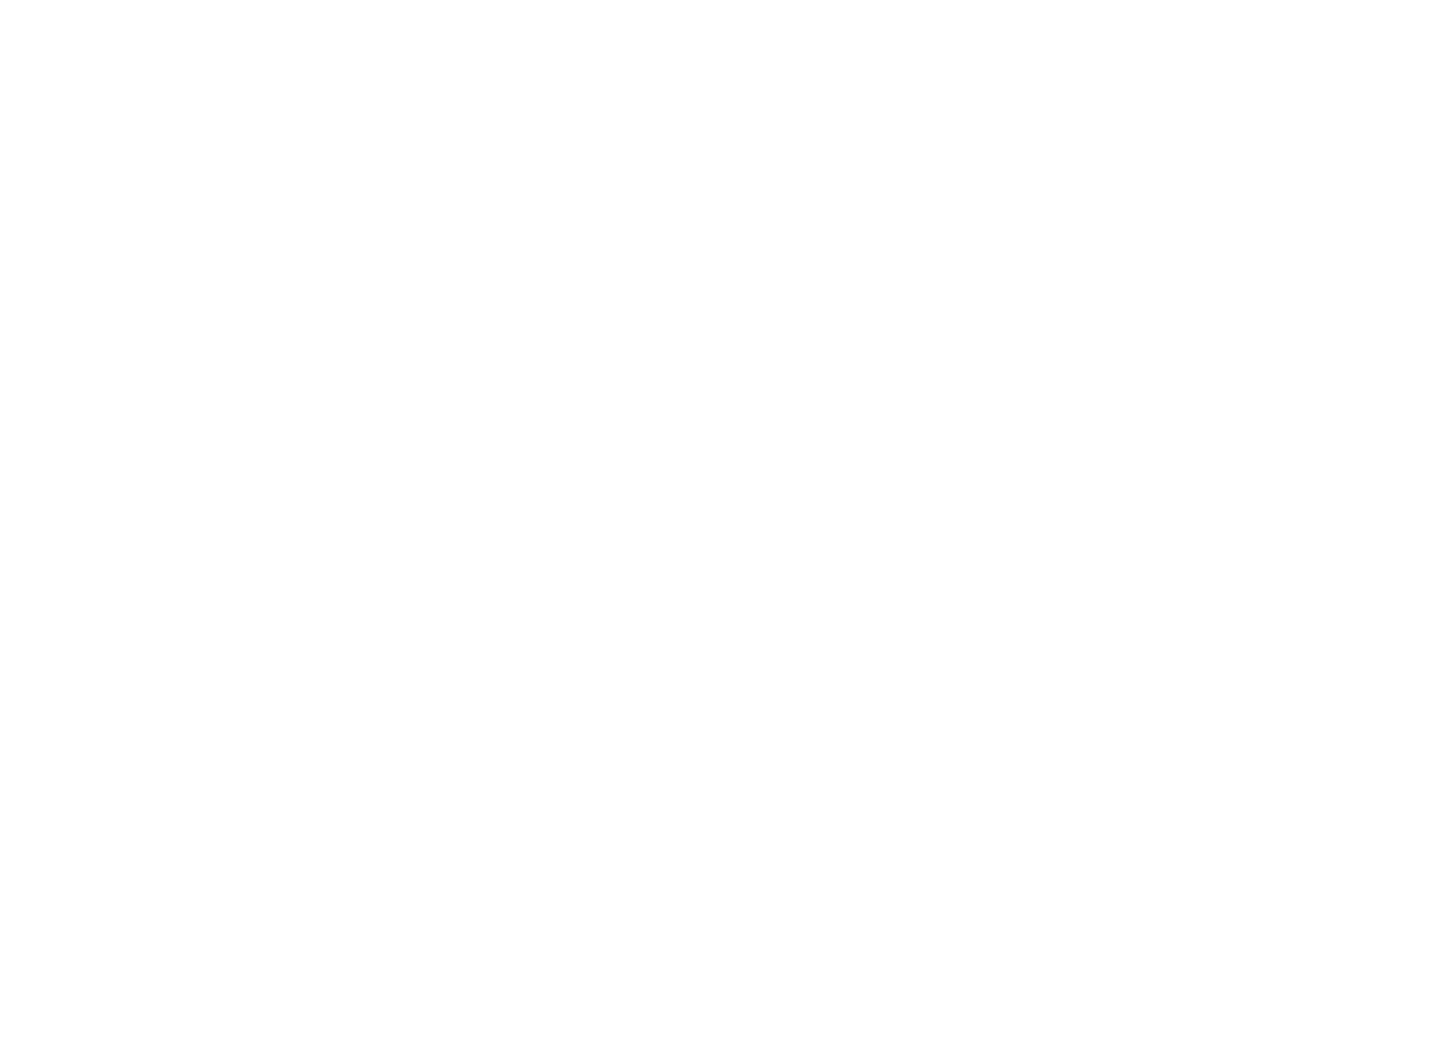 White logo that says "the Huffington Ecumenical Institute at HCHC"